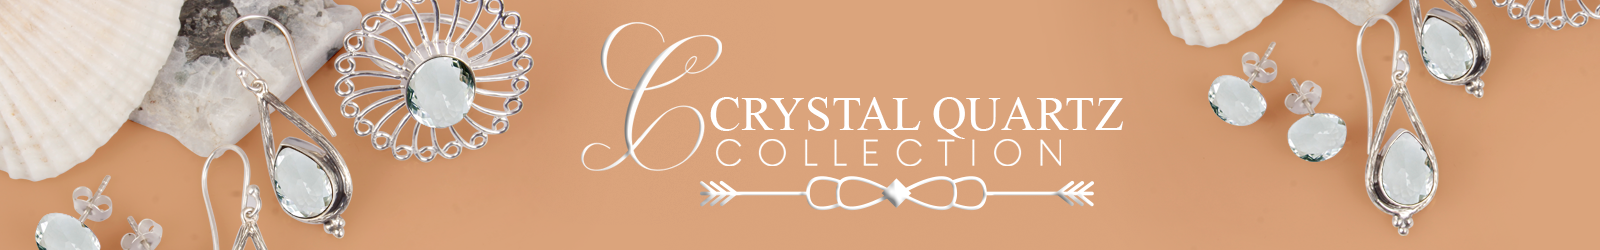 Silver Crystal Quartz Jewelry Wholesale Supplier